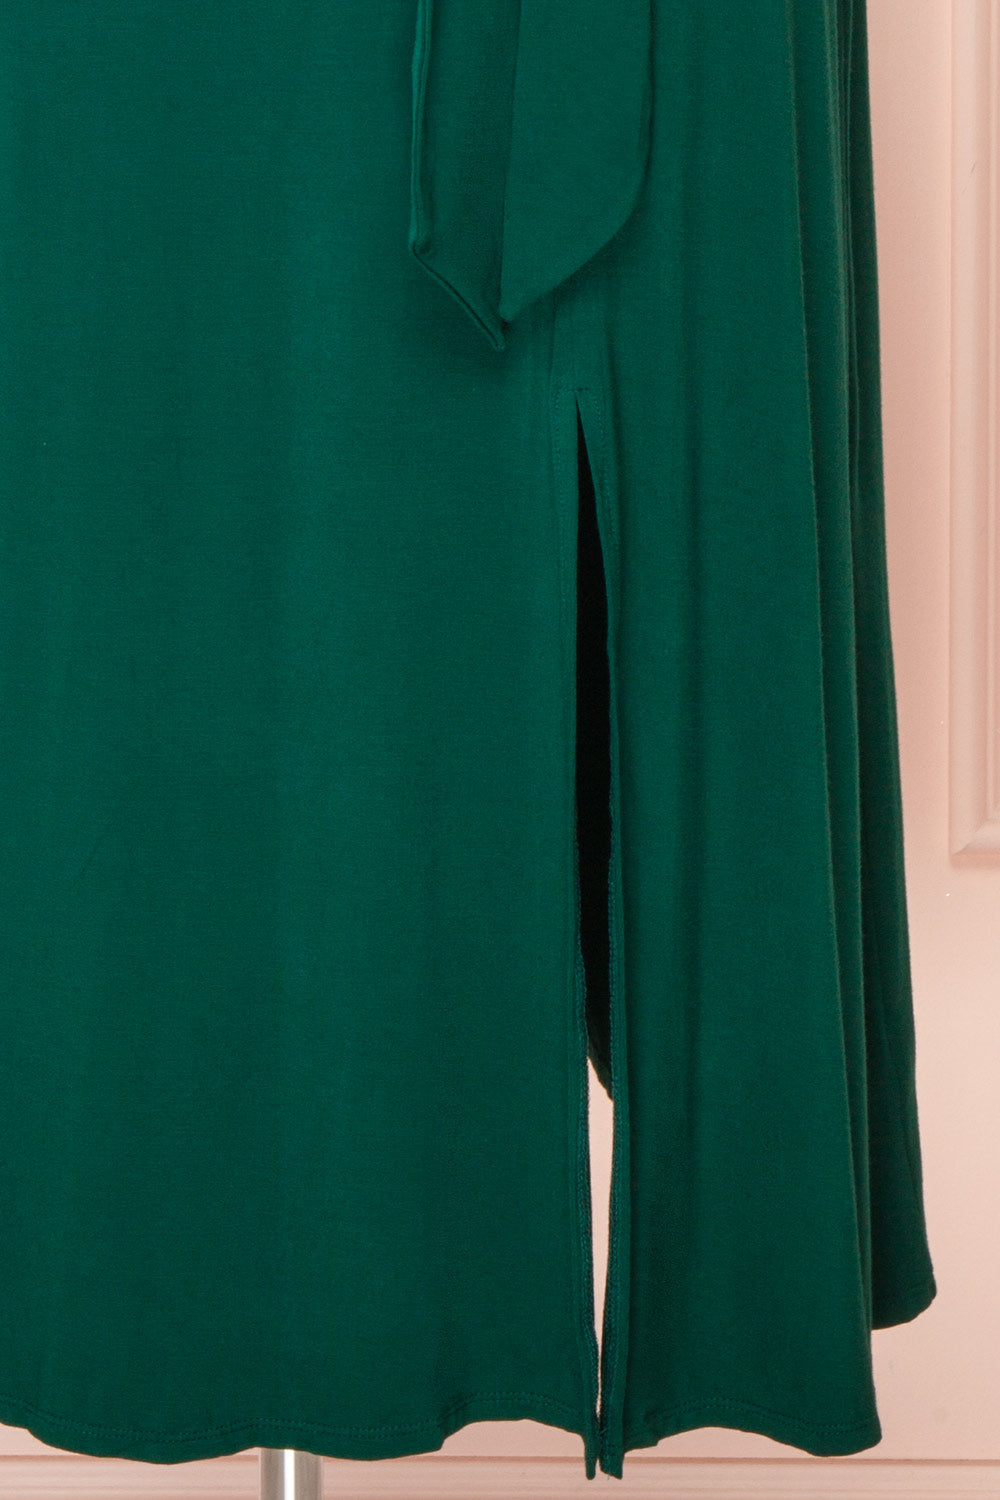 Deliciae Plus Size Green Midi Dress w/ Fabric Belt | Boutique 1861 details